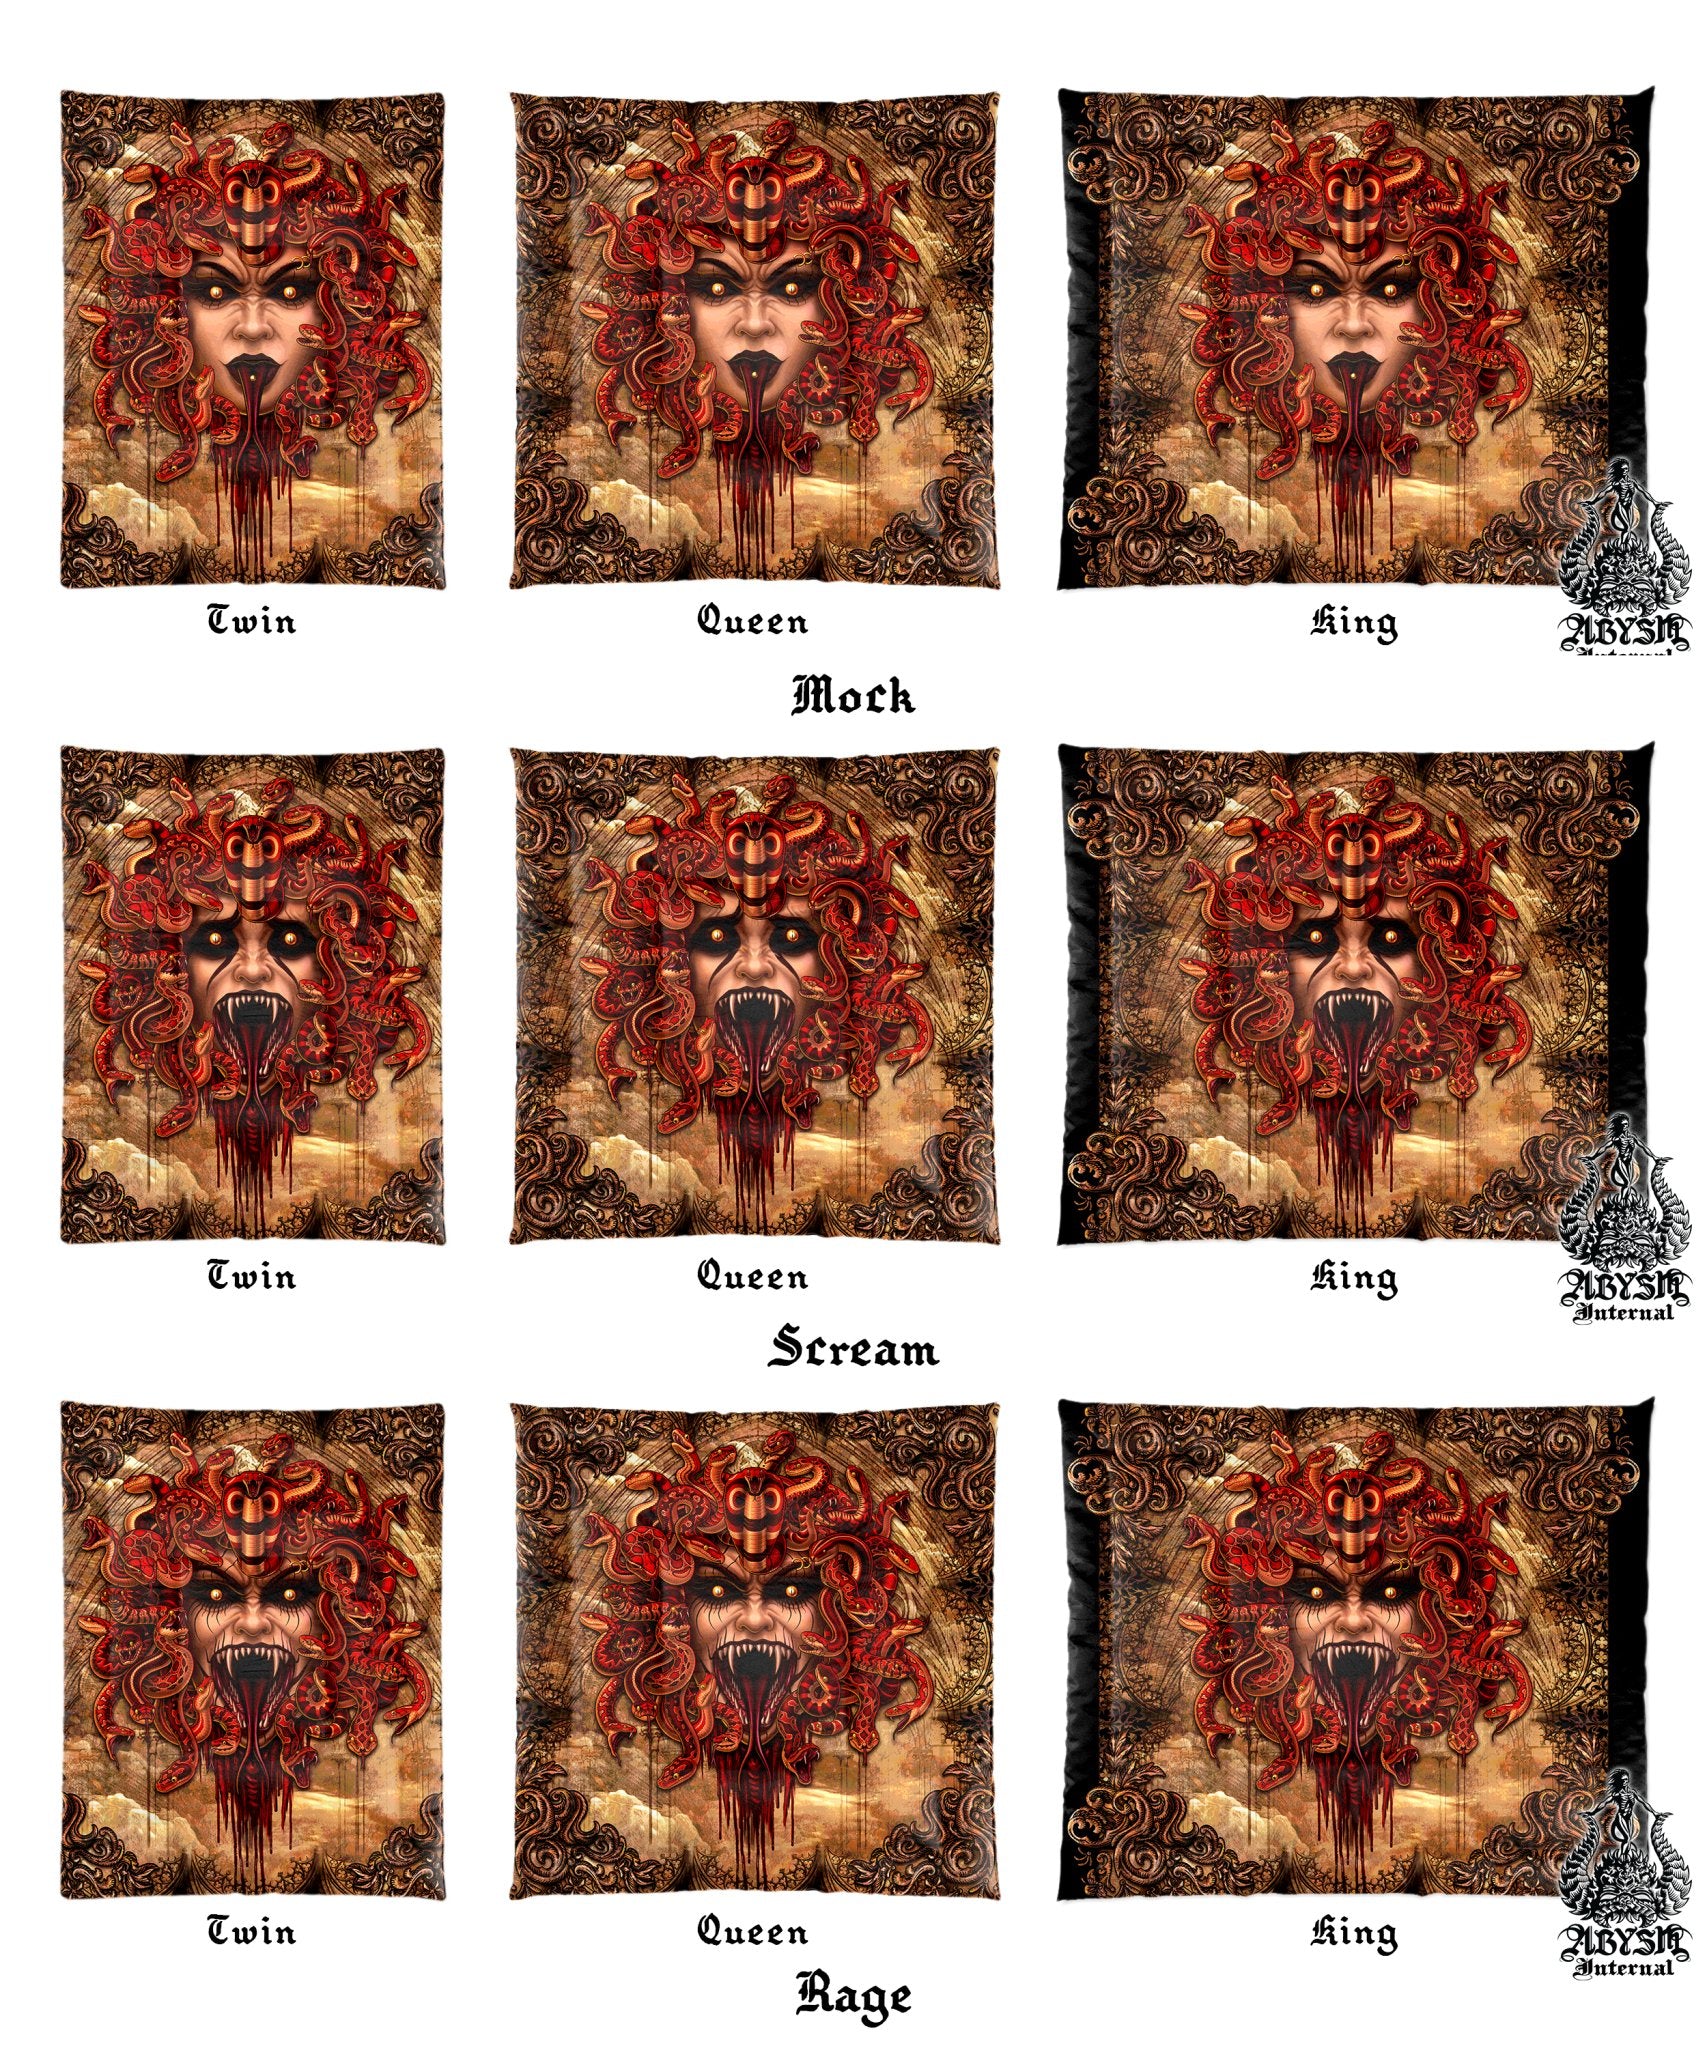 Goth Bed Cover, Duvet or Comforter, Medusa Skull, Horror Bedding Set, Bedroom Decor, King, Queen & Twin Size - Beige, 4 Faces - Abysm Internal